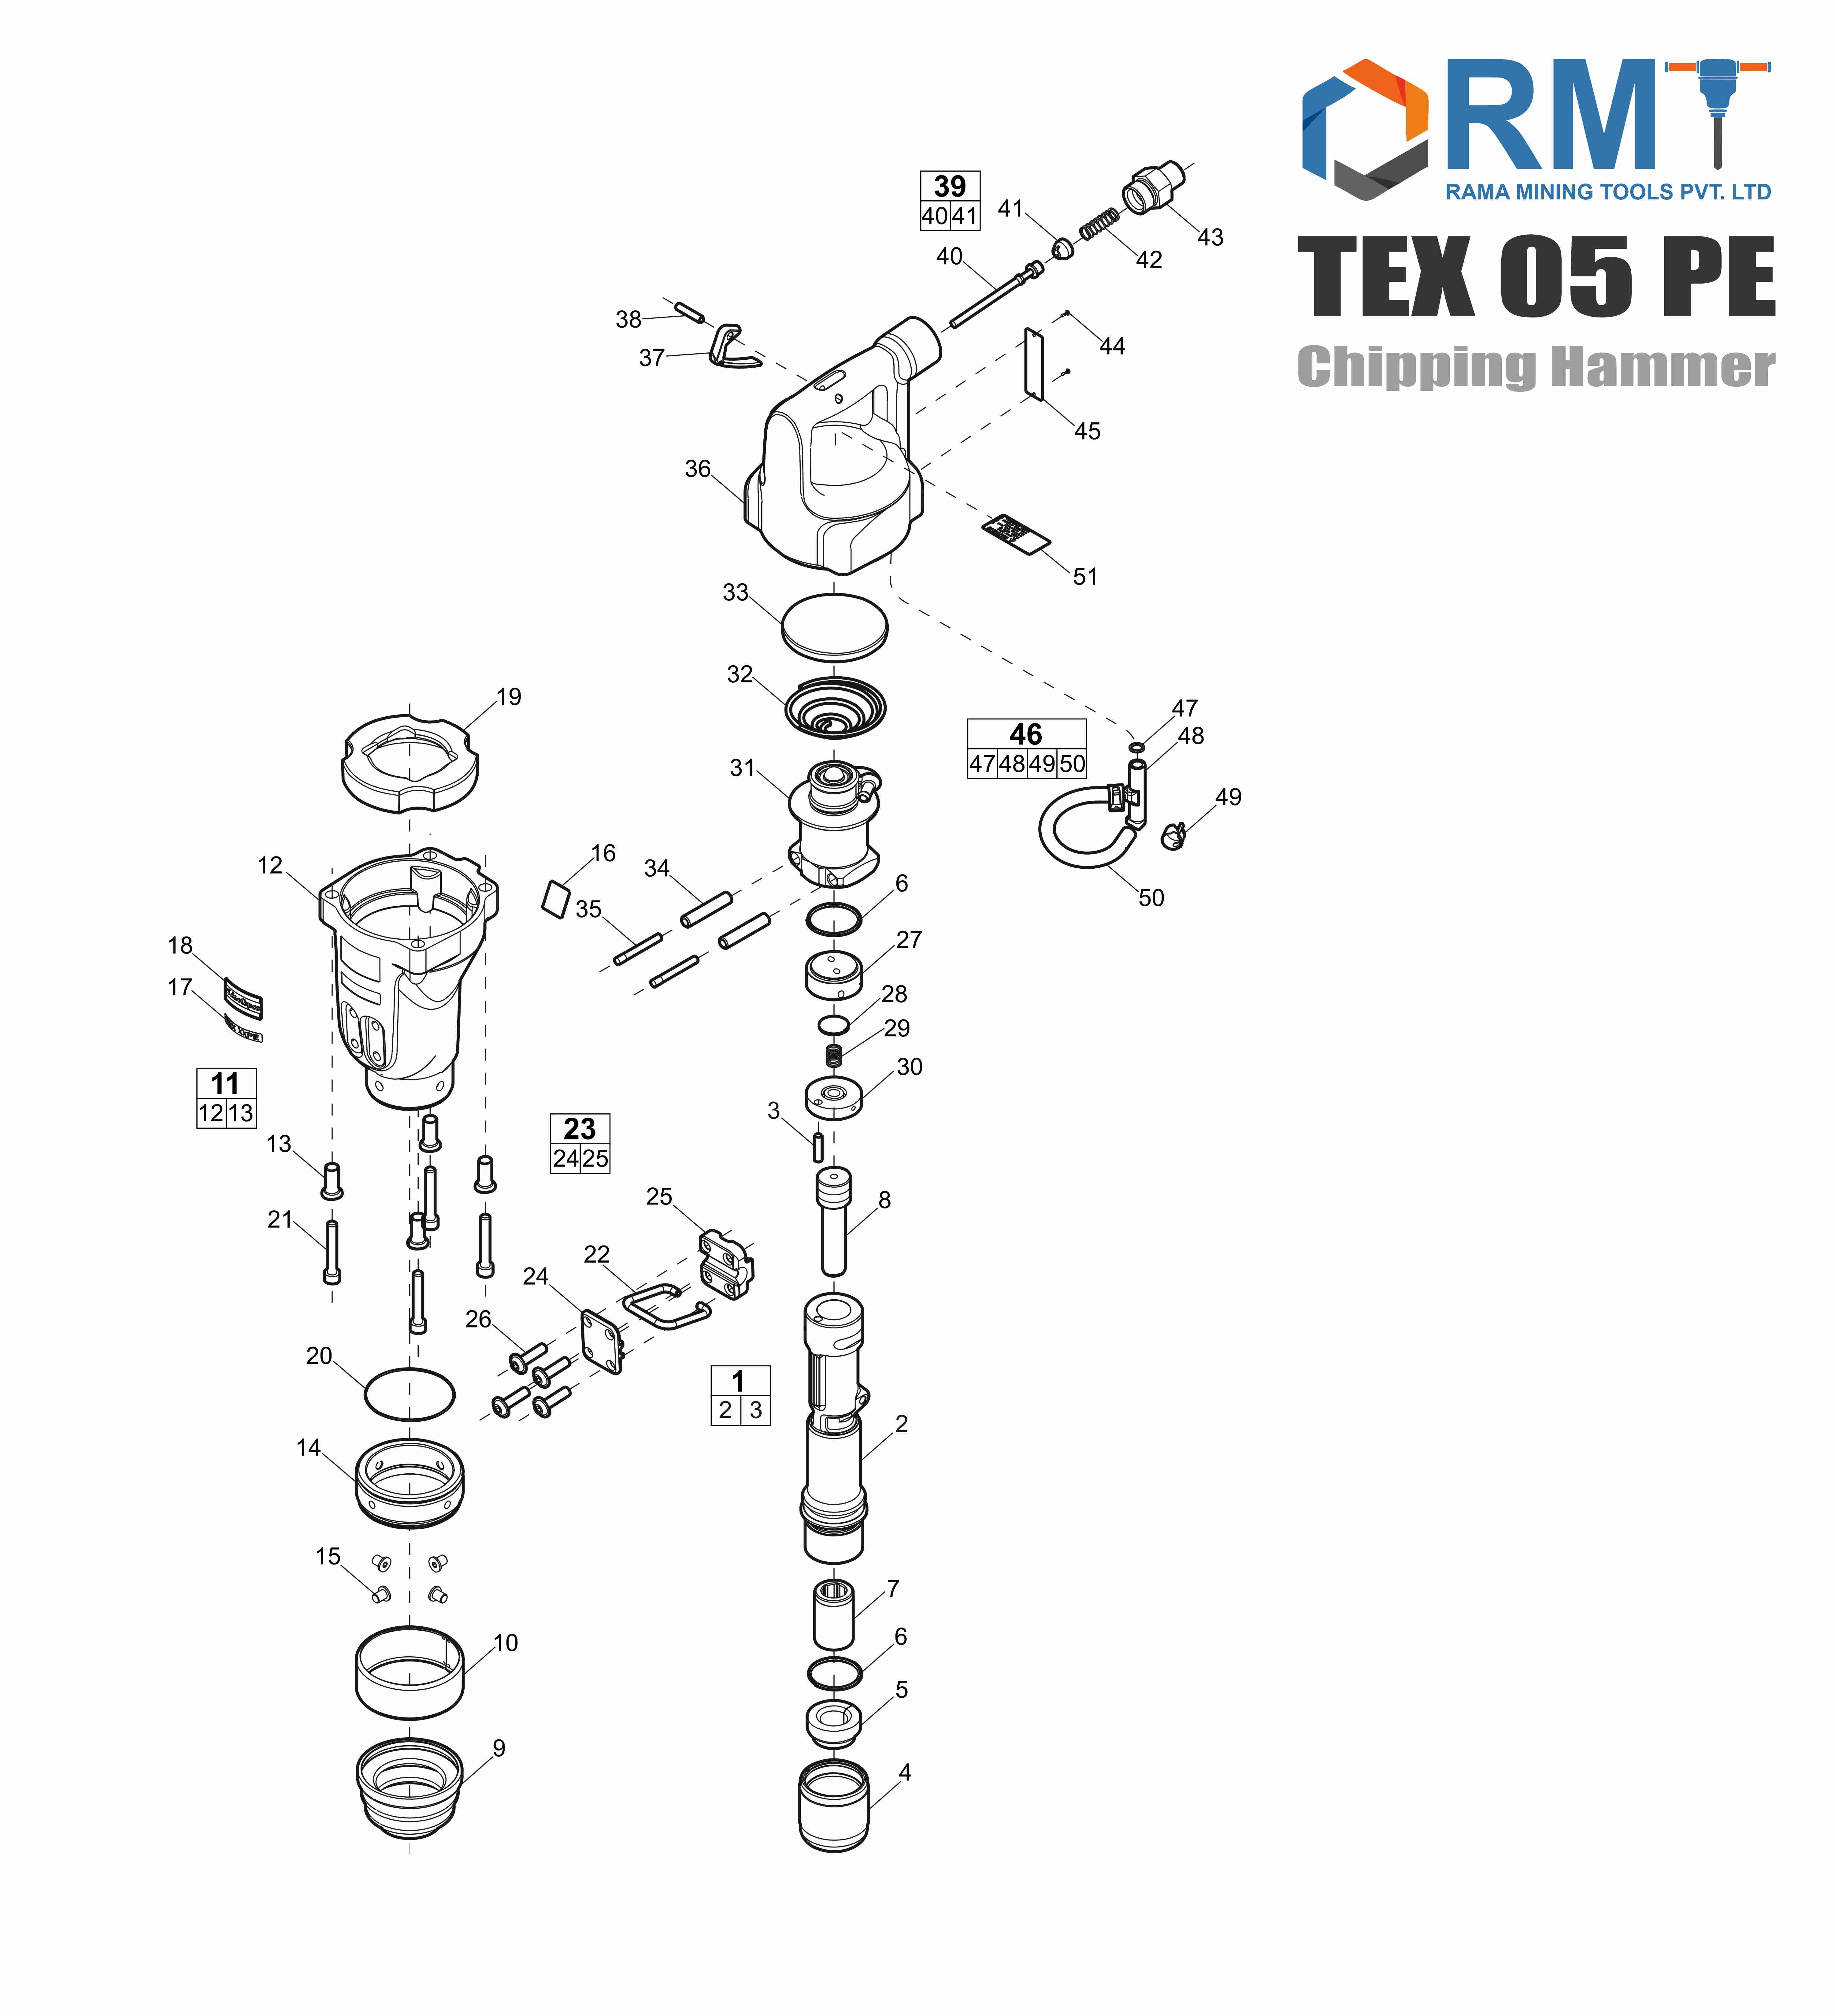 TEX 05 PE - Chipping Hammer